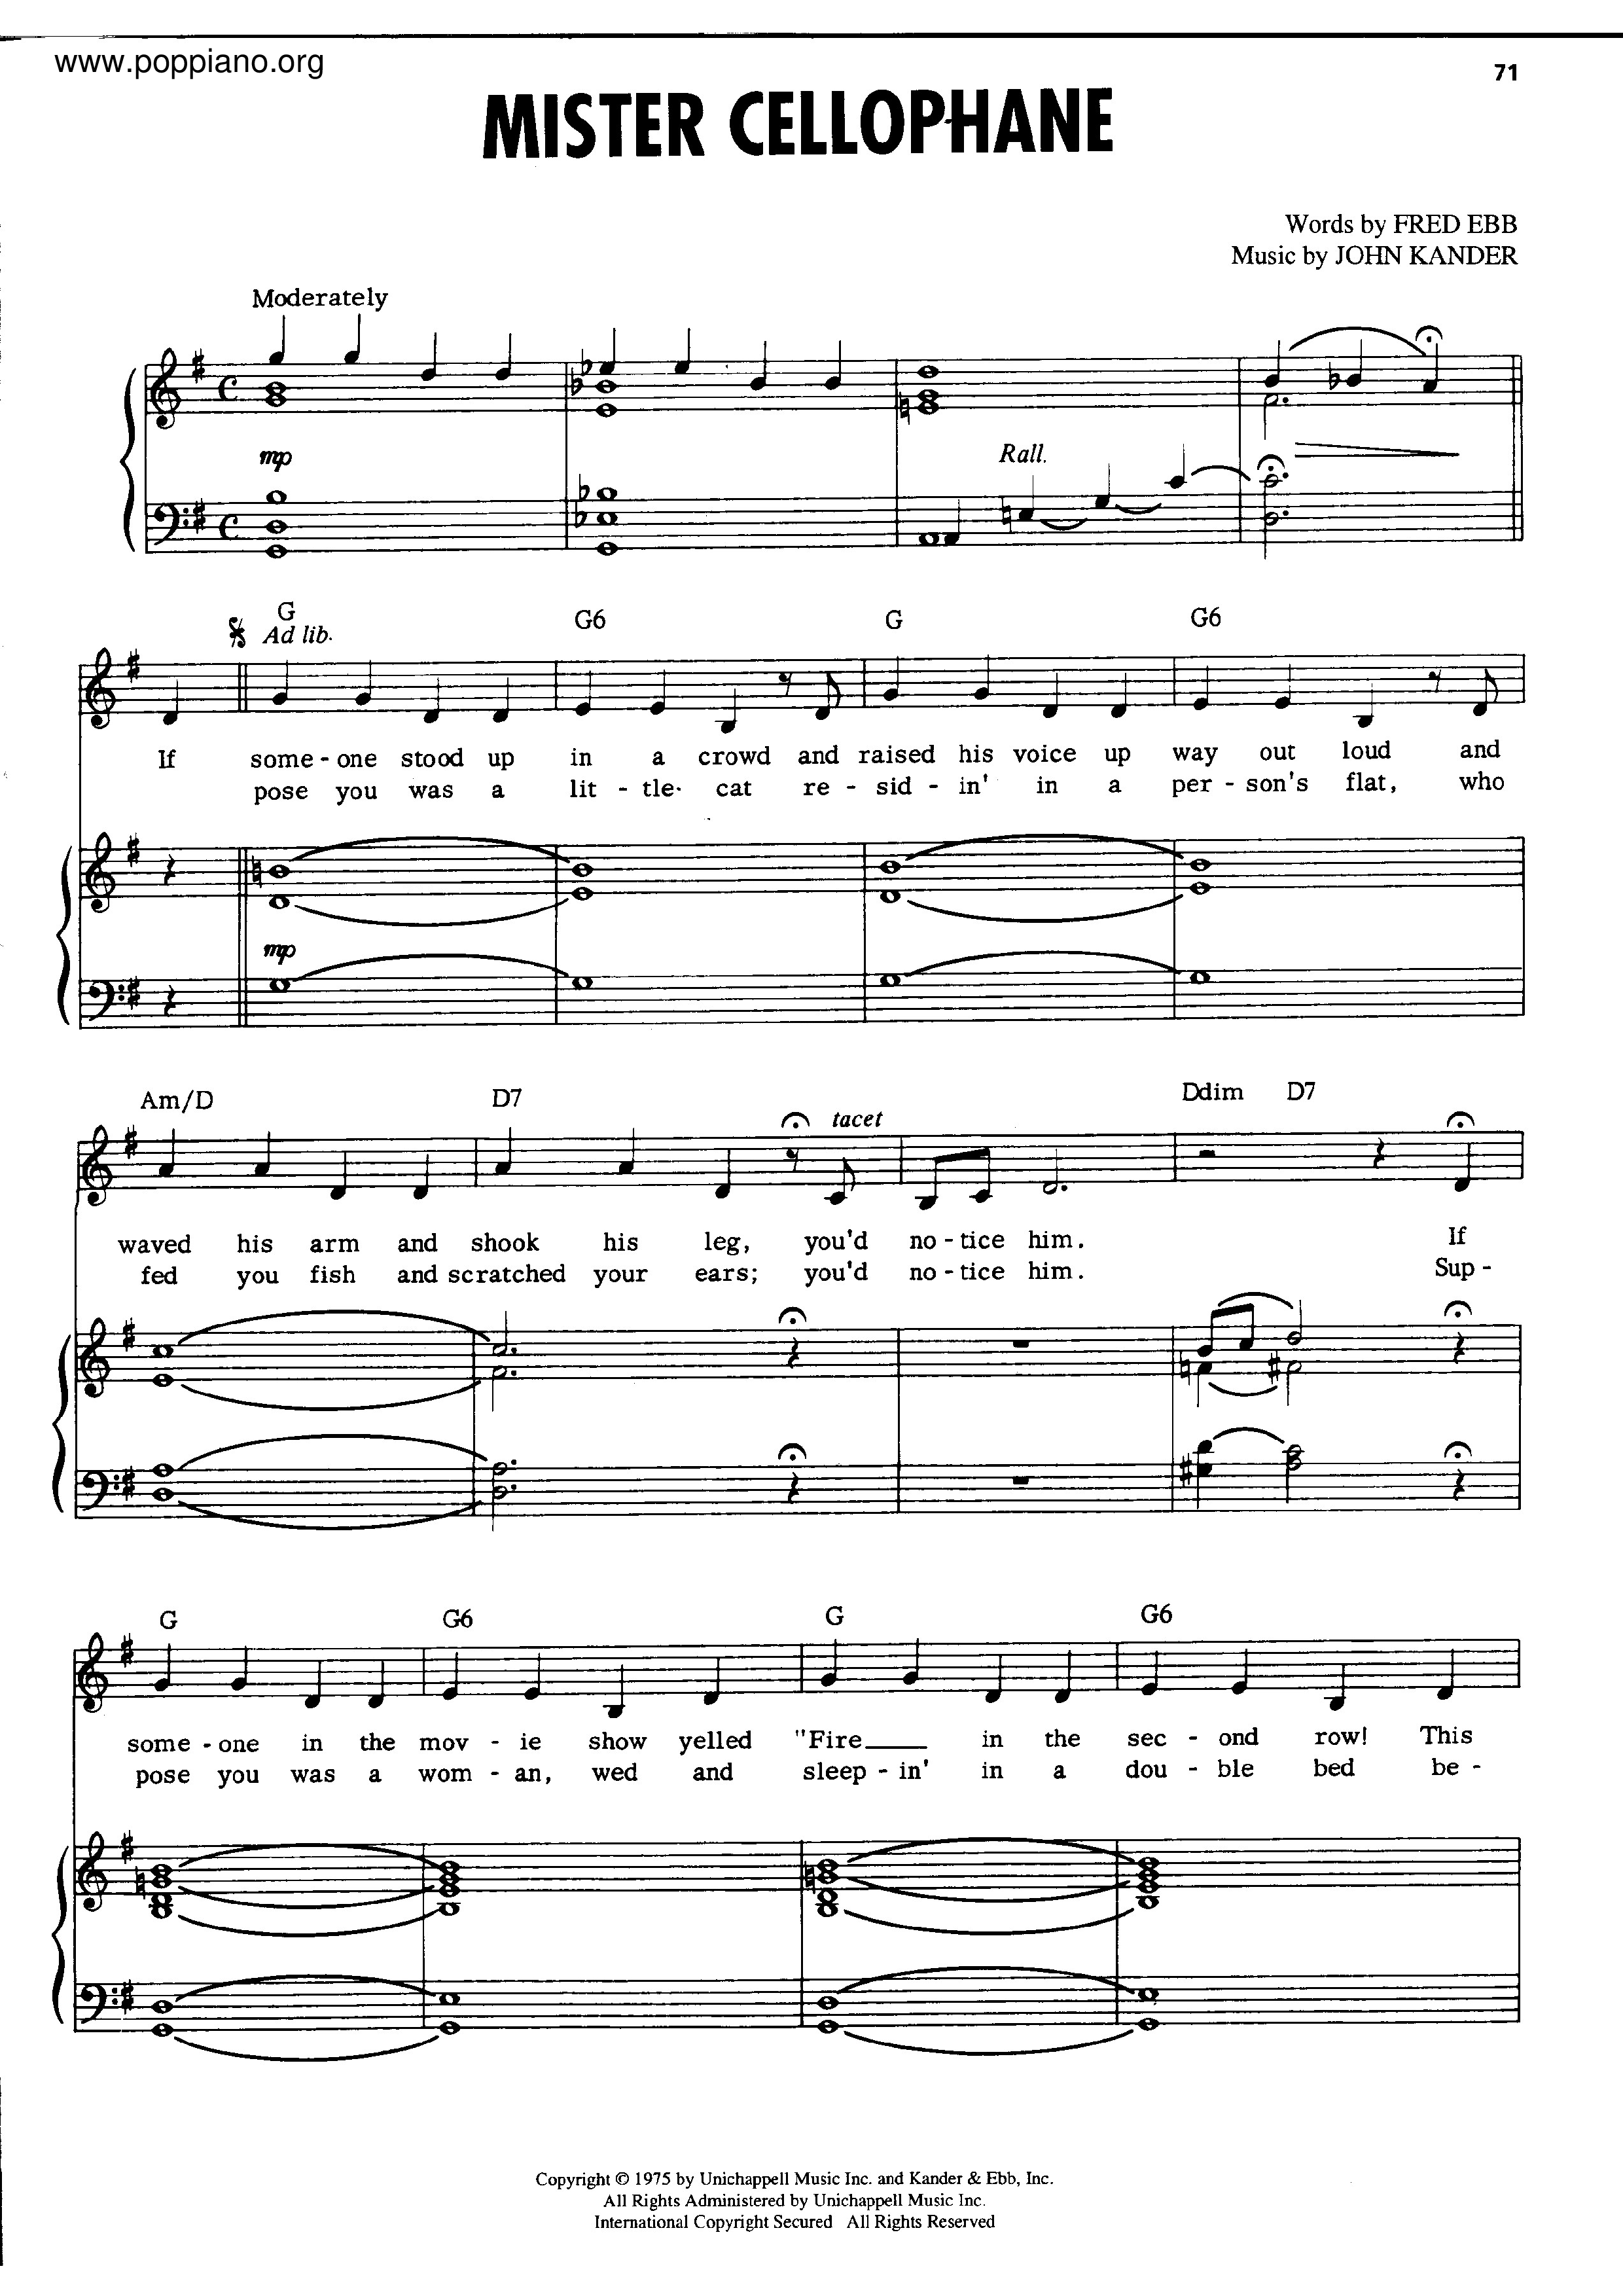 Mister Cellophane Score